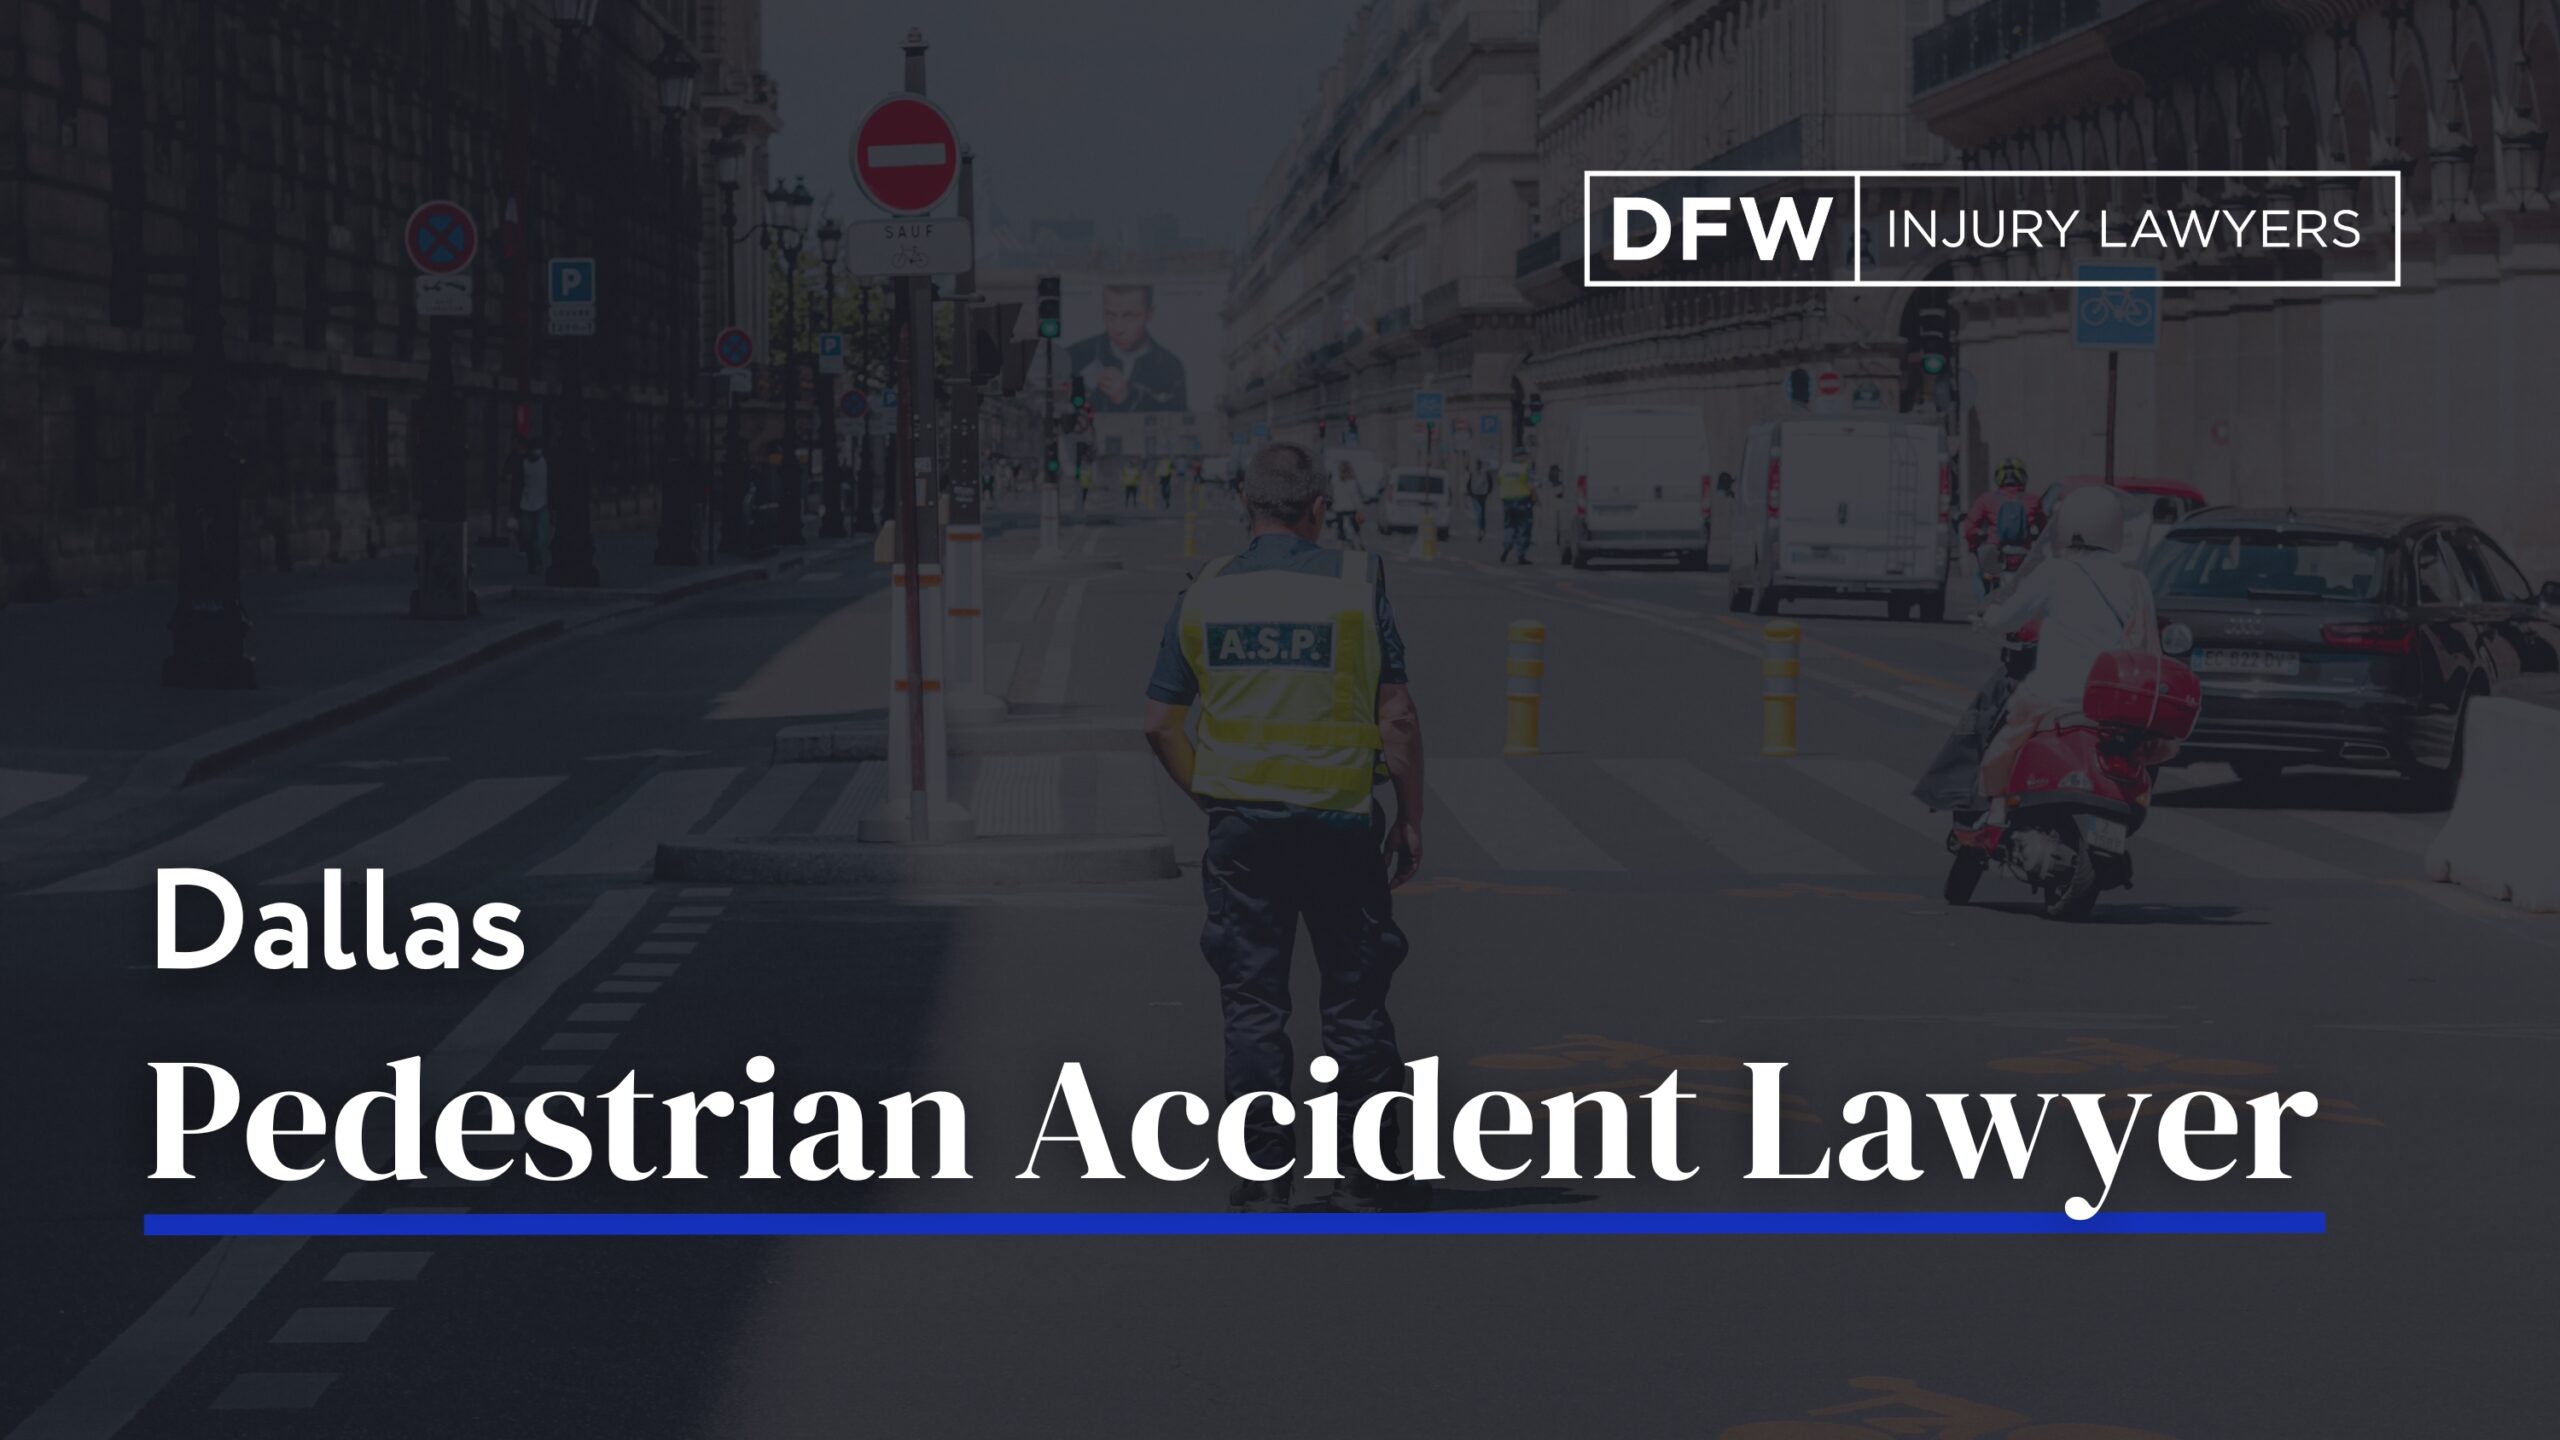 Dallas Pedestrian Accident Lawyer - DFW